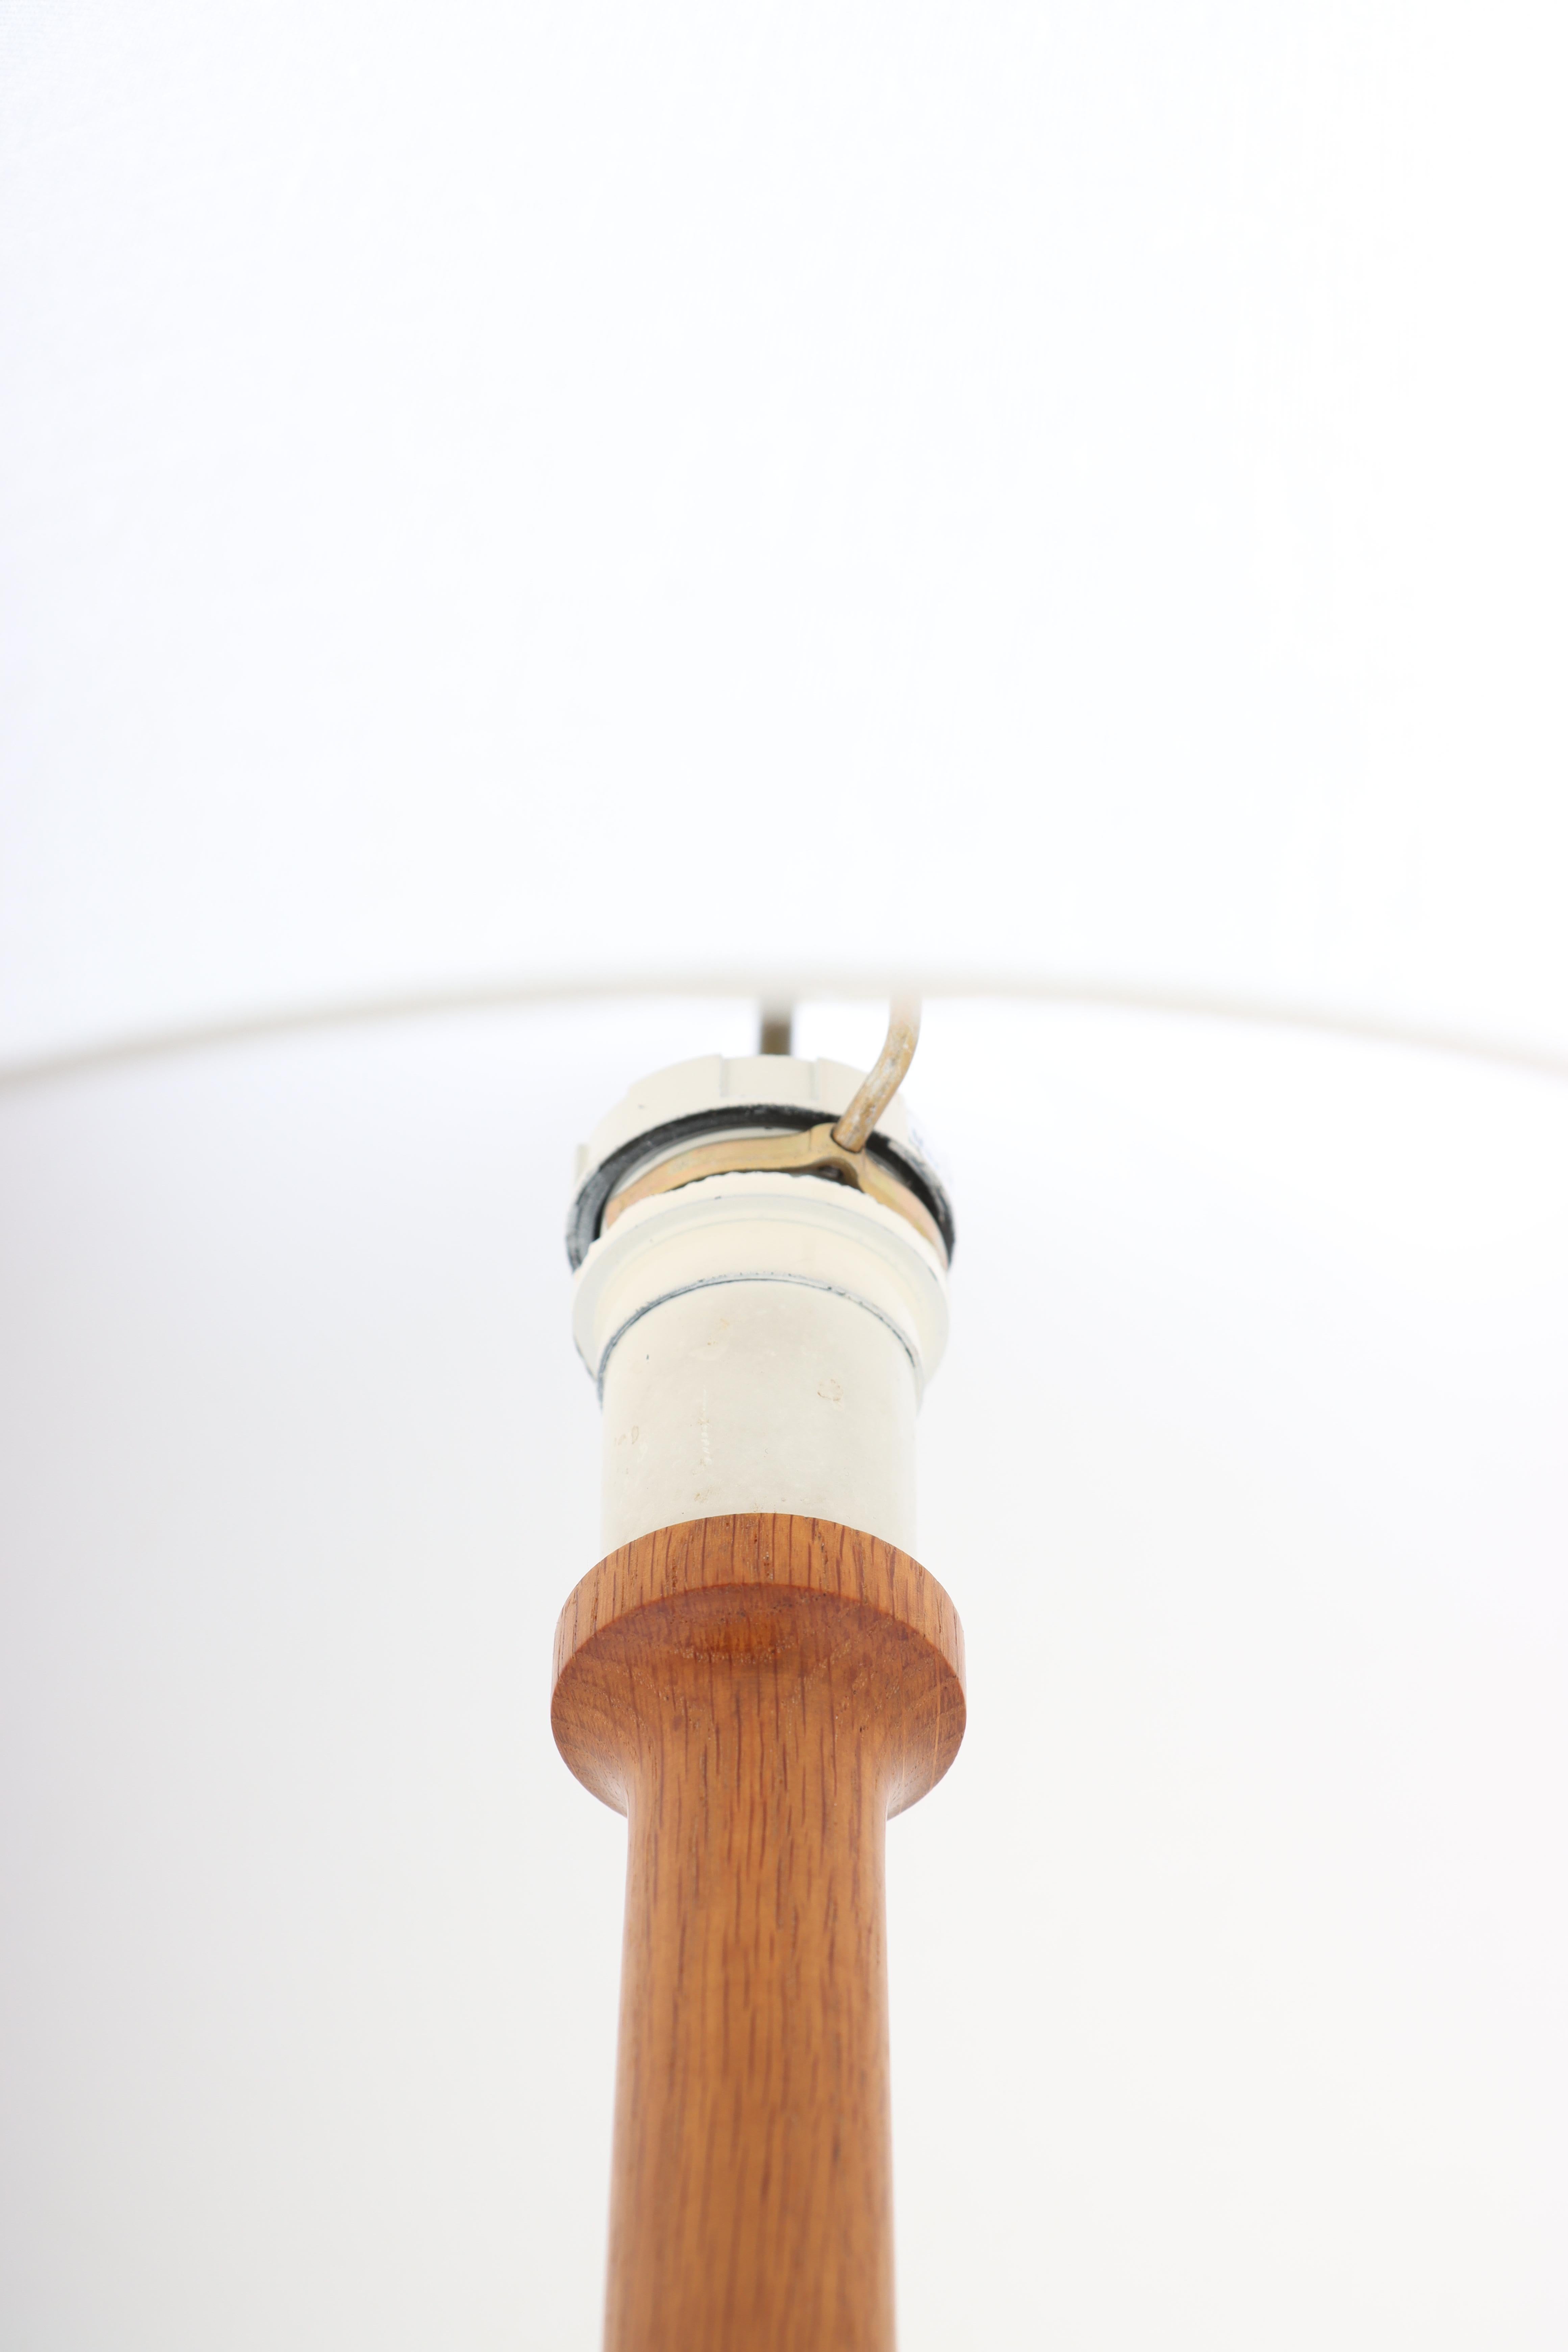 Danish Modern Midcentury Floor Lamp in Oak, Danish Design, 1950s In Good Condition For Sale In Lejre, DK